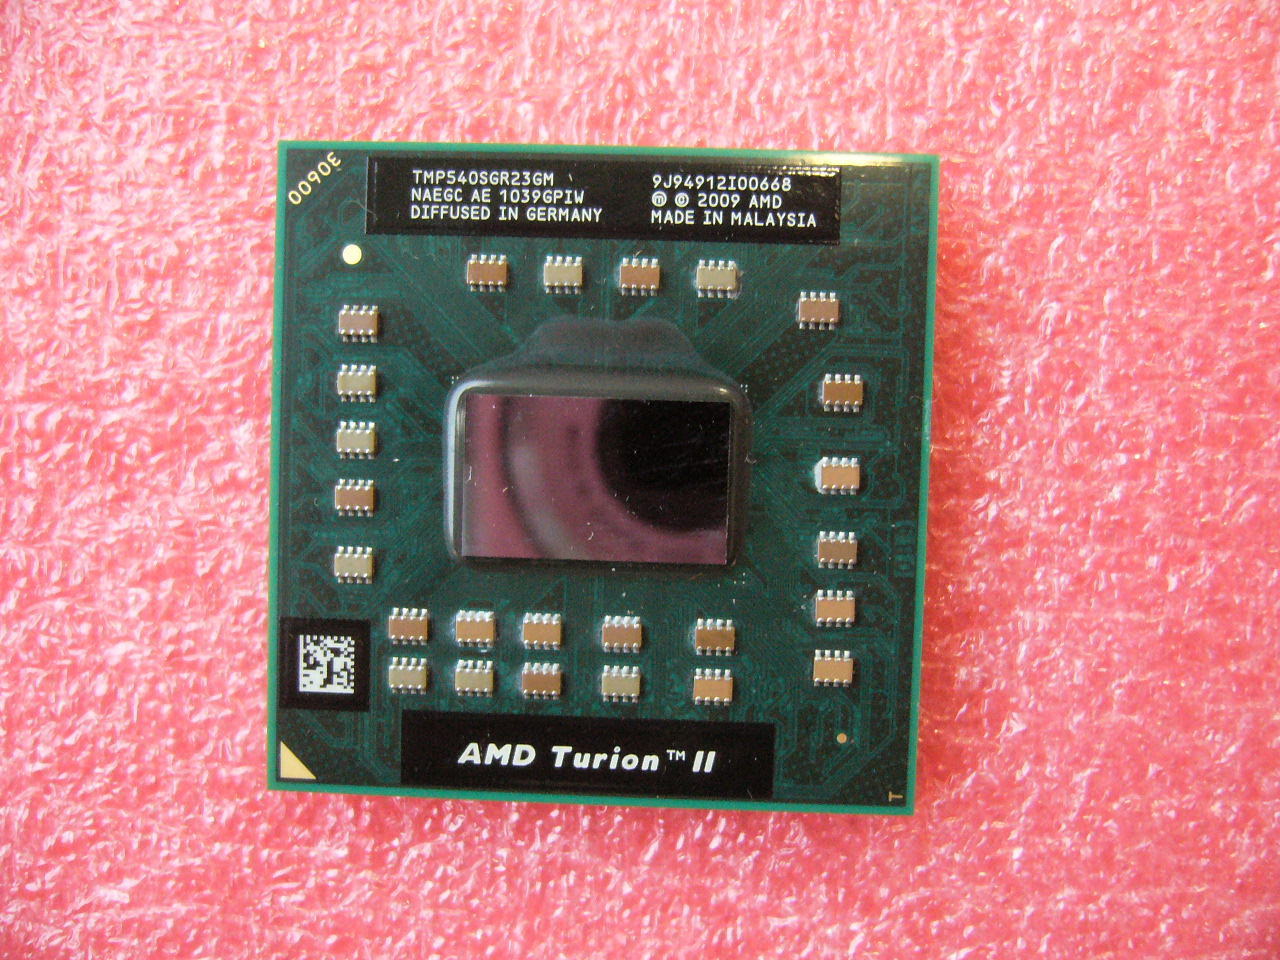 QTY 1x AMD Turion II P540 2.4GHz Dual-Core (TMP540SGR23GM) Laptop CPU Socket S1 - Click Image to Close